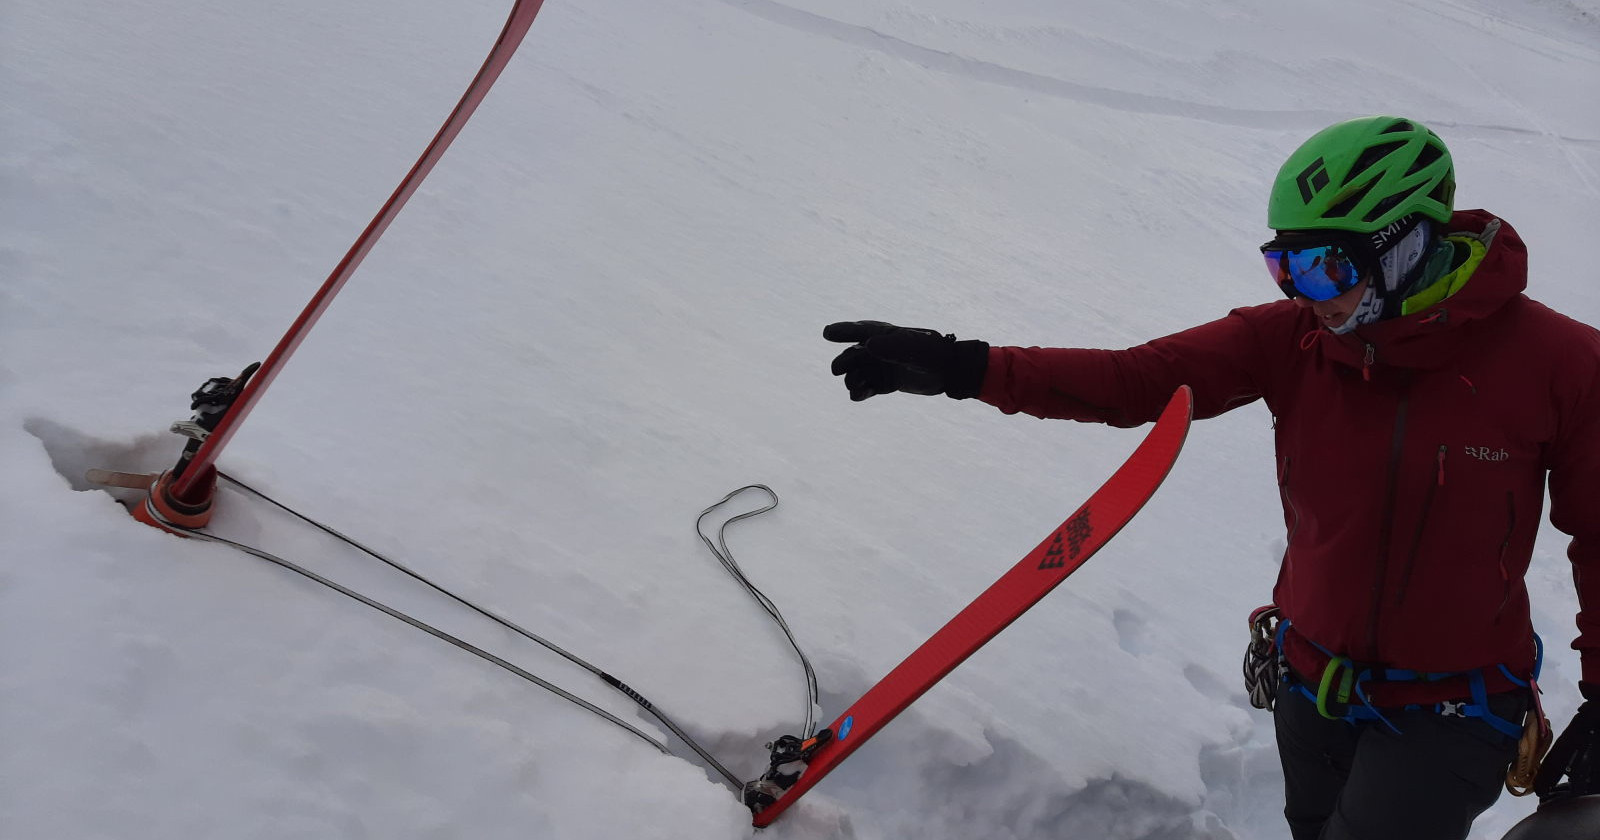 Marek Kuziel - CMC Intro to Ski Mountaneering Course - Day 2 - Anchor training